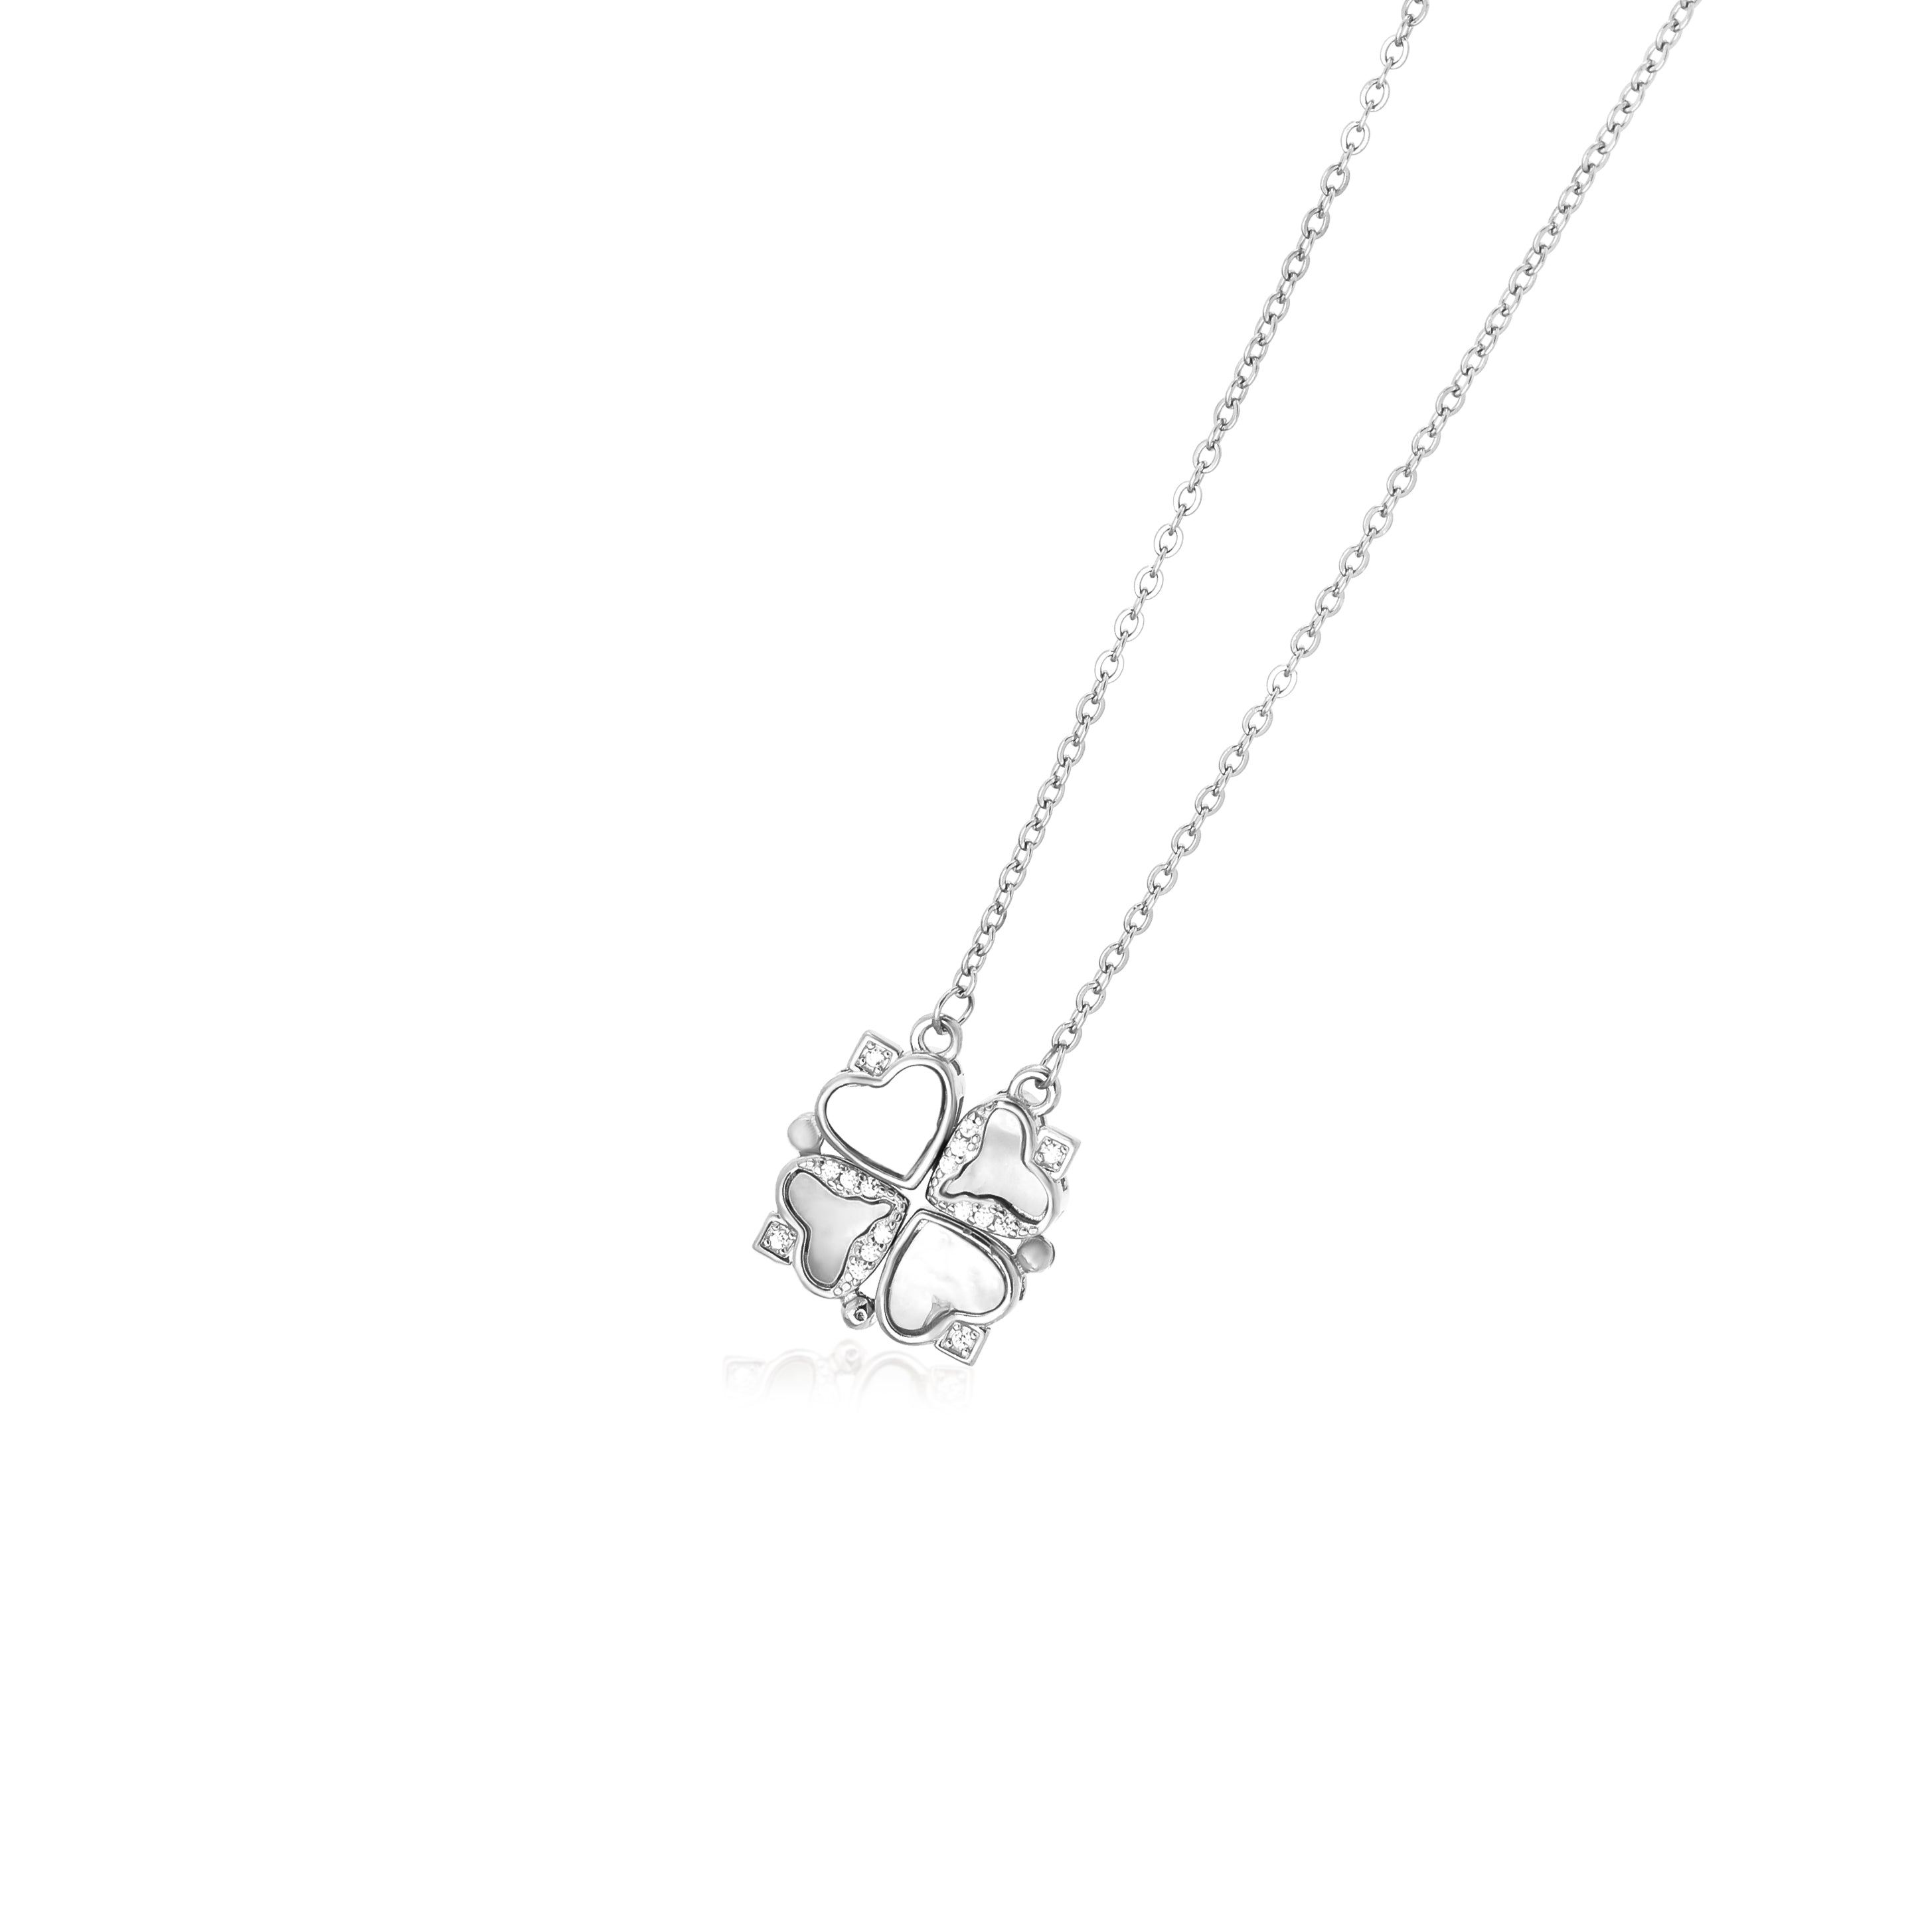 Adjustable 4 Leaf Clover Heart Necklace Silver Clover Pendant Zircon Stones